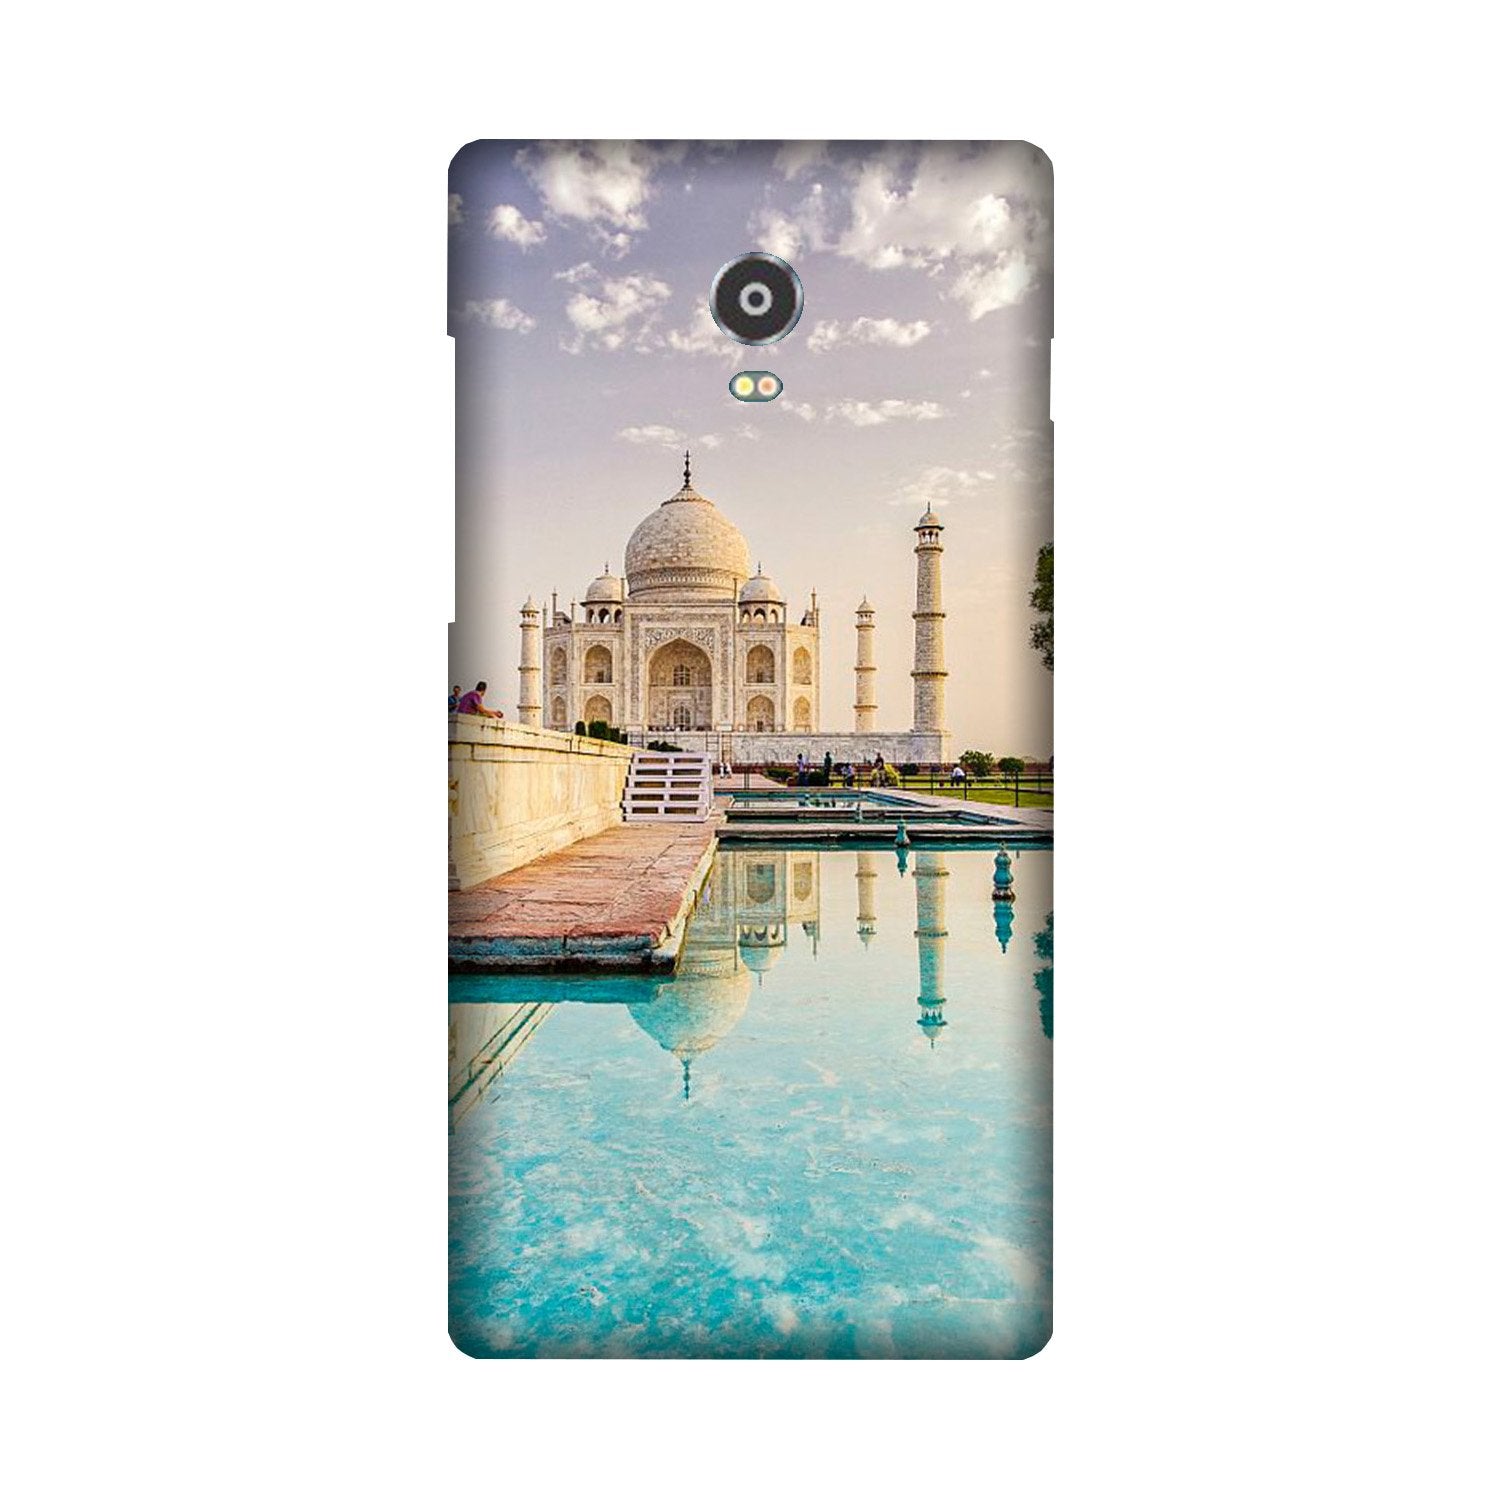 Taj Mahal Case for Lenovo Vibe P1 (Design No. 297)